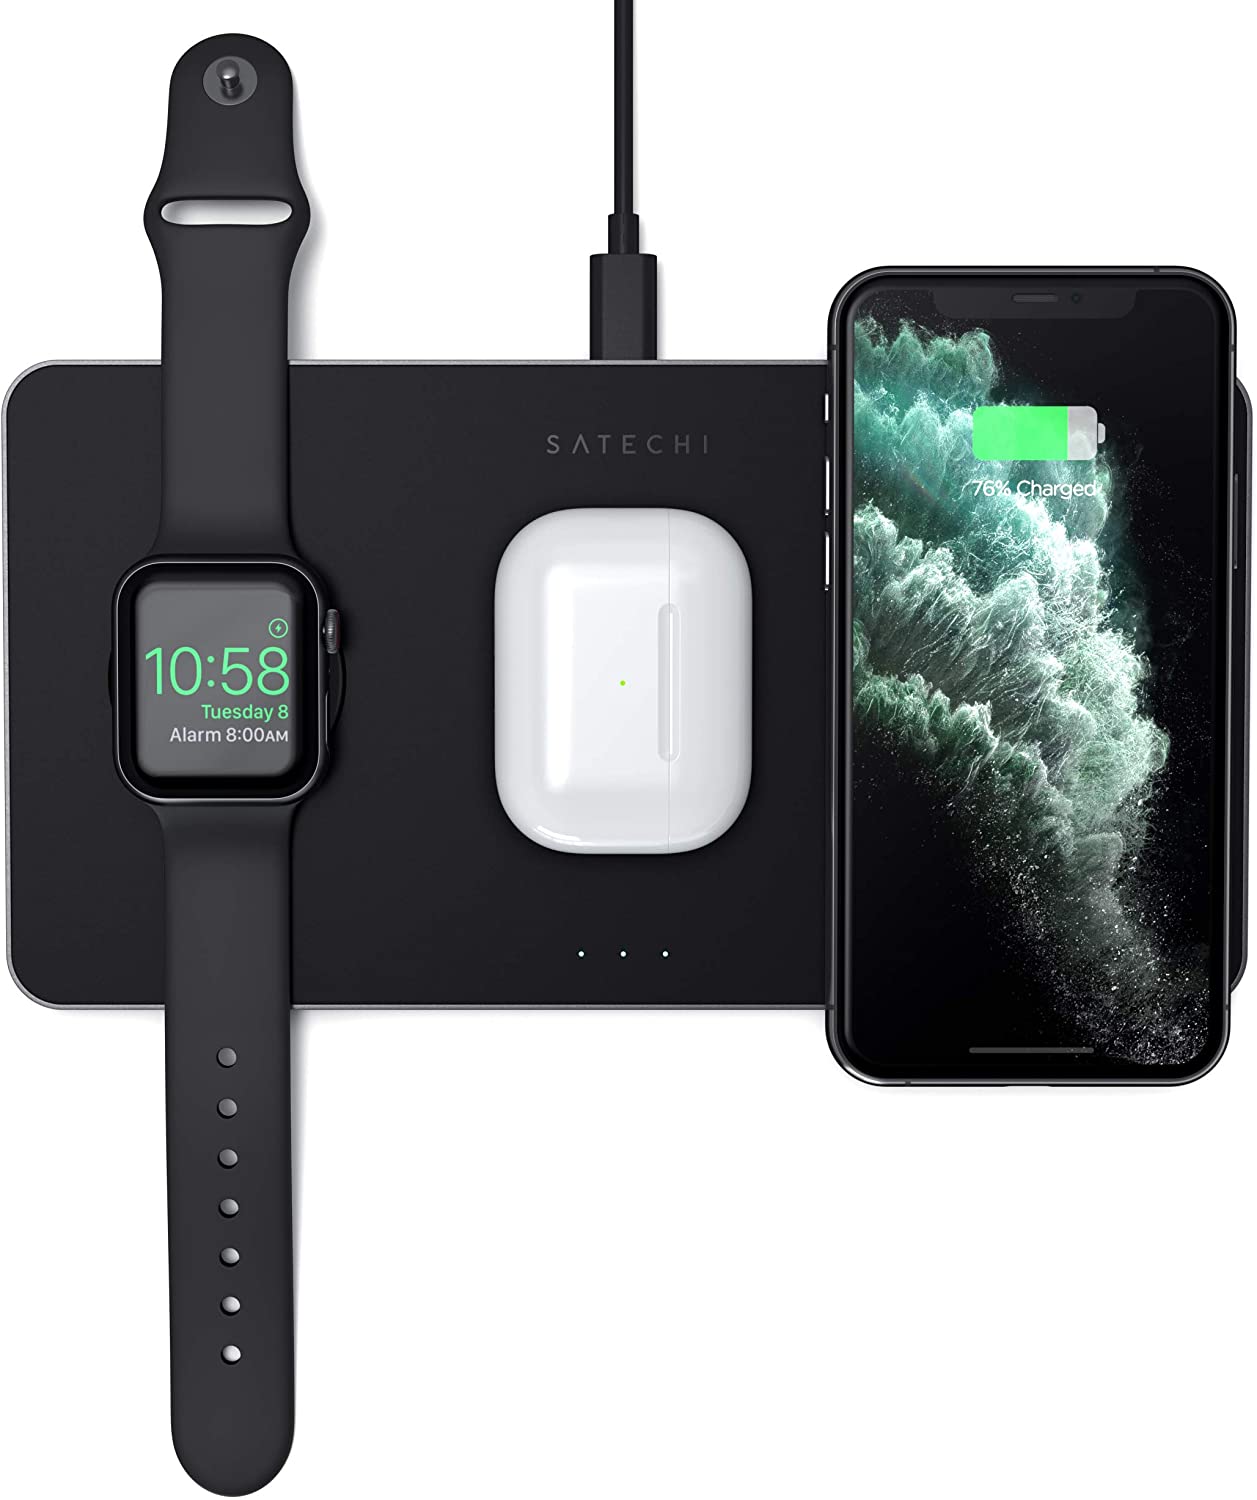 Satechi、Apple WatchとiPhoneとAirPodsを同時充電可能なワイヤレス充電パッドを9月17日頃に国内でも発売へ